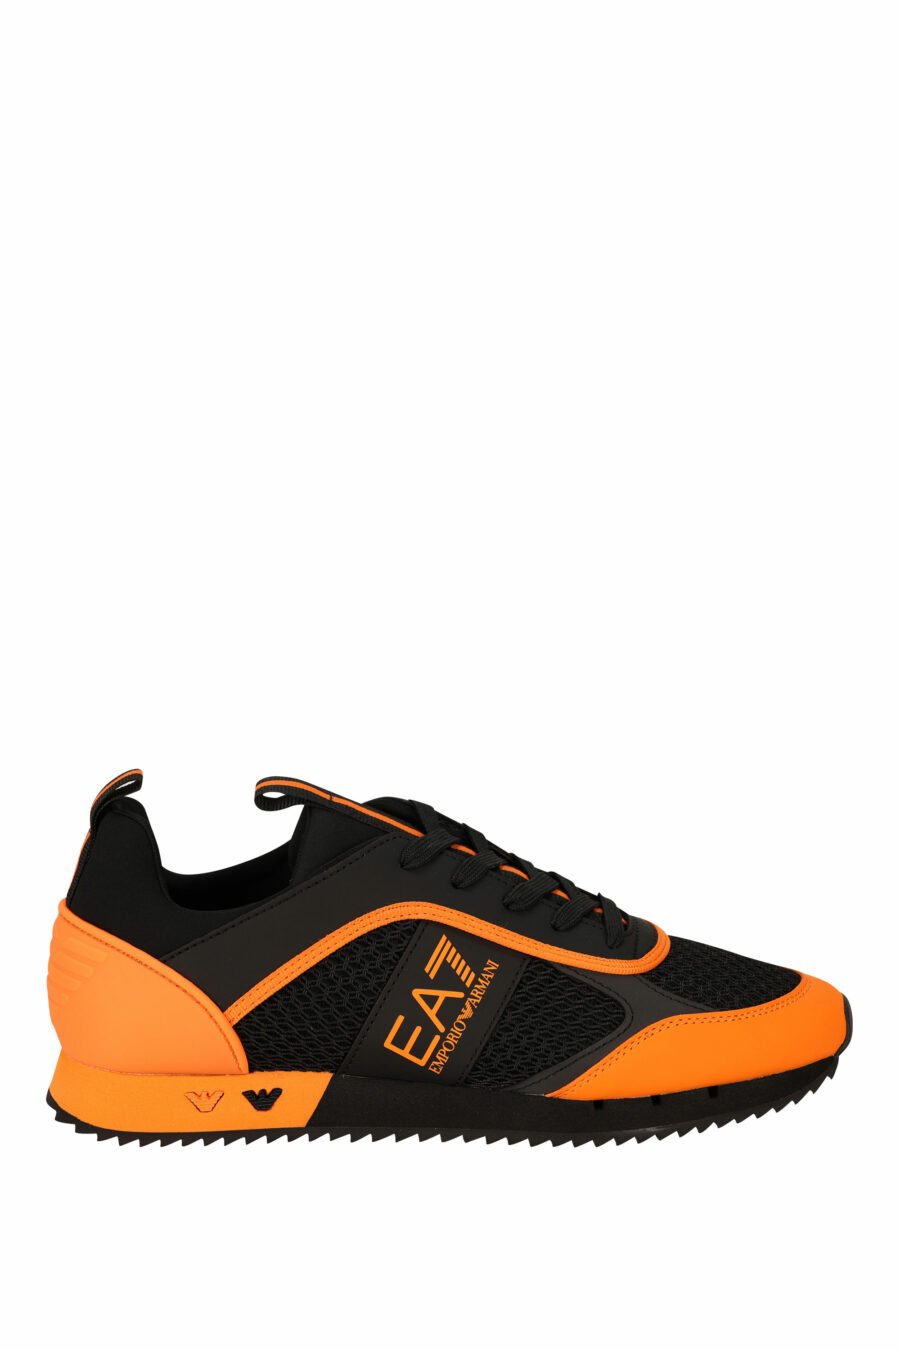 Zapatillas negras con logo "lux identity" naranja - 8057970798118